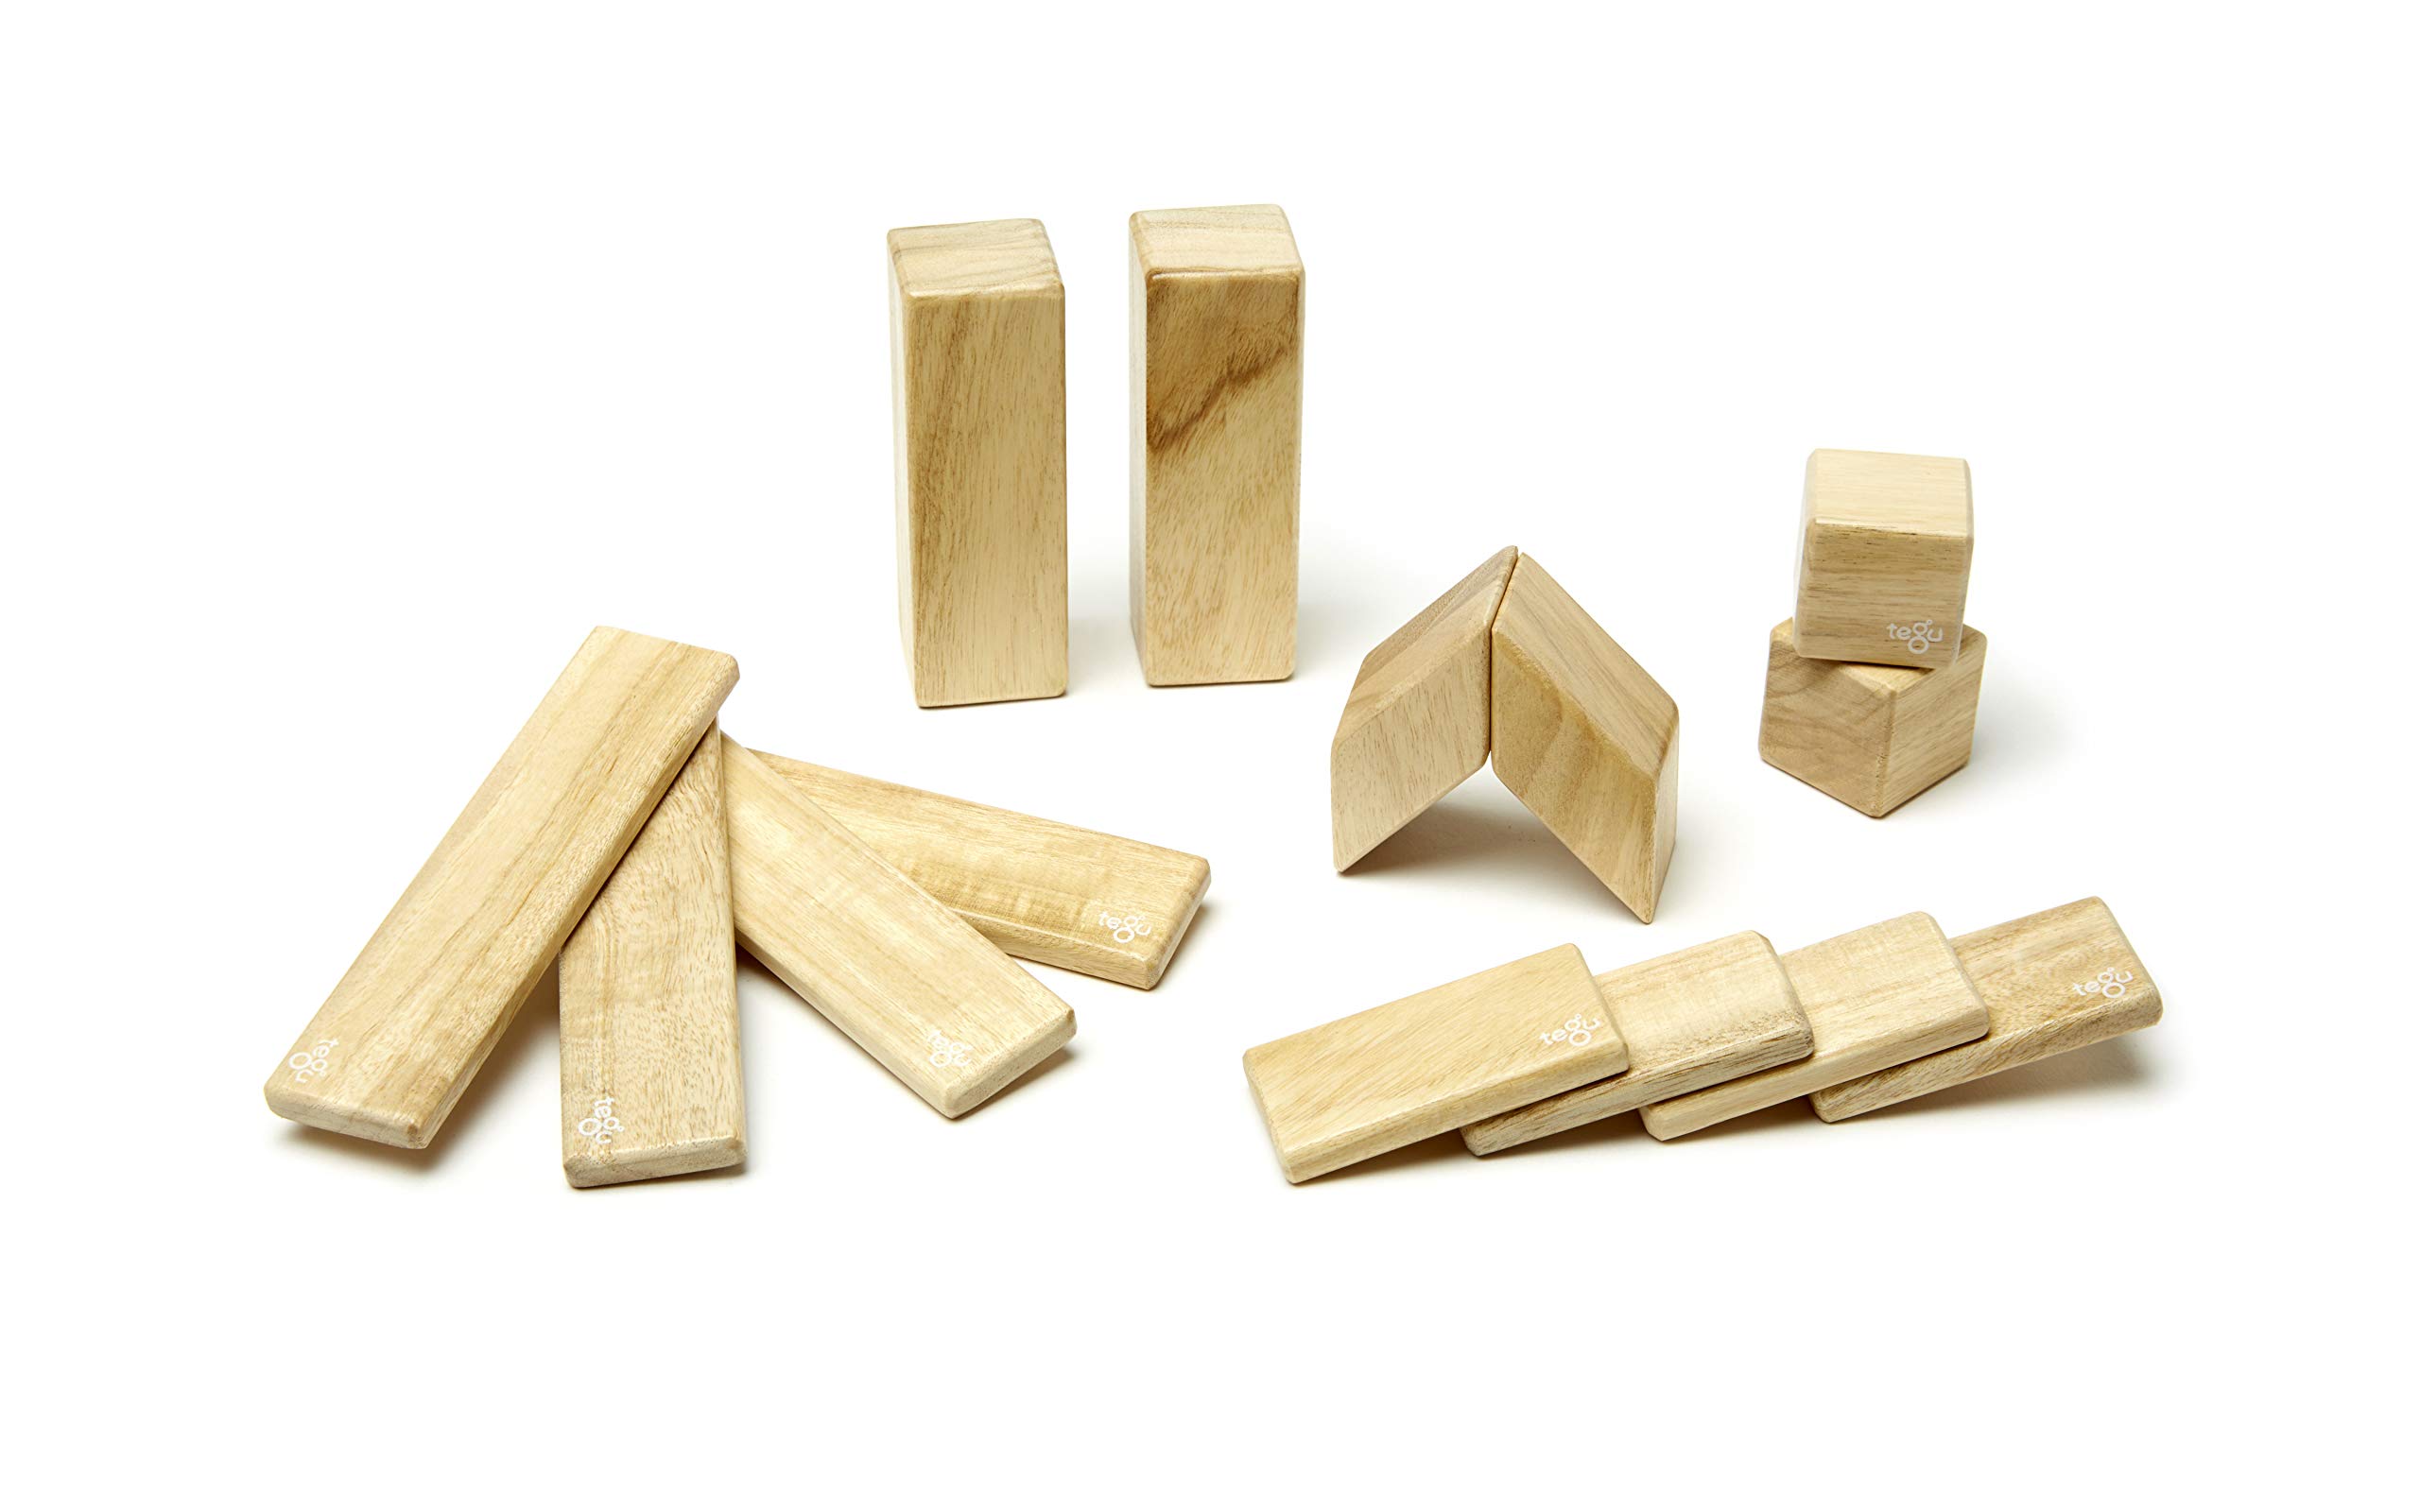 14 Piece Tegu Magnetic Wooden Block Set Natural